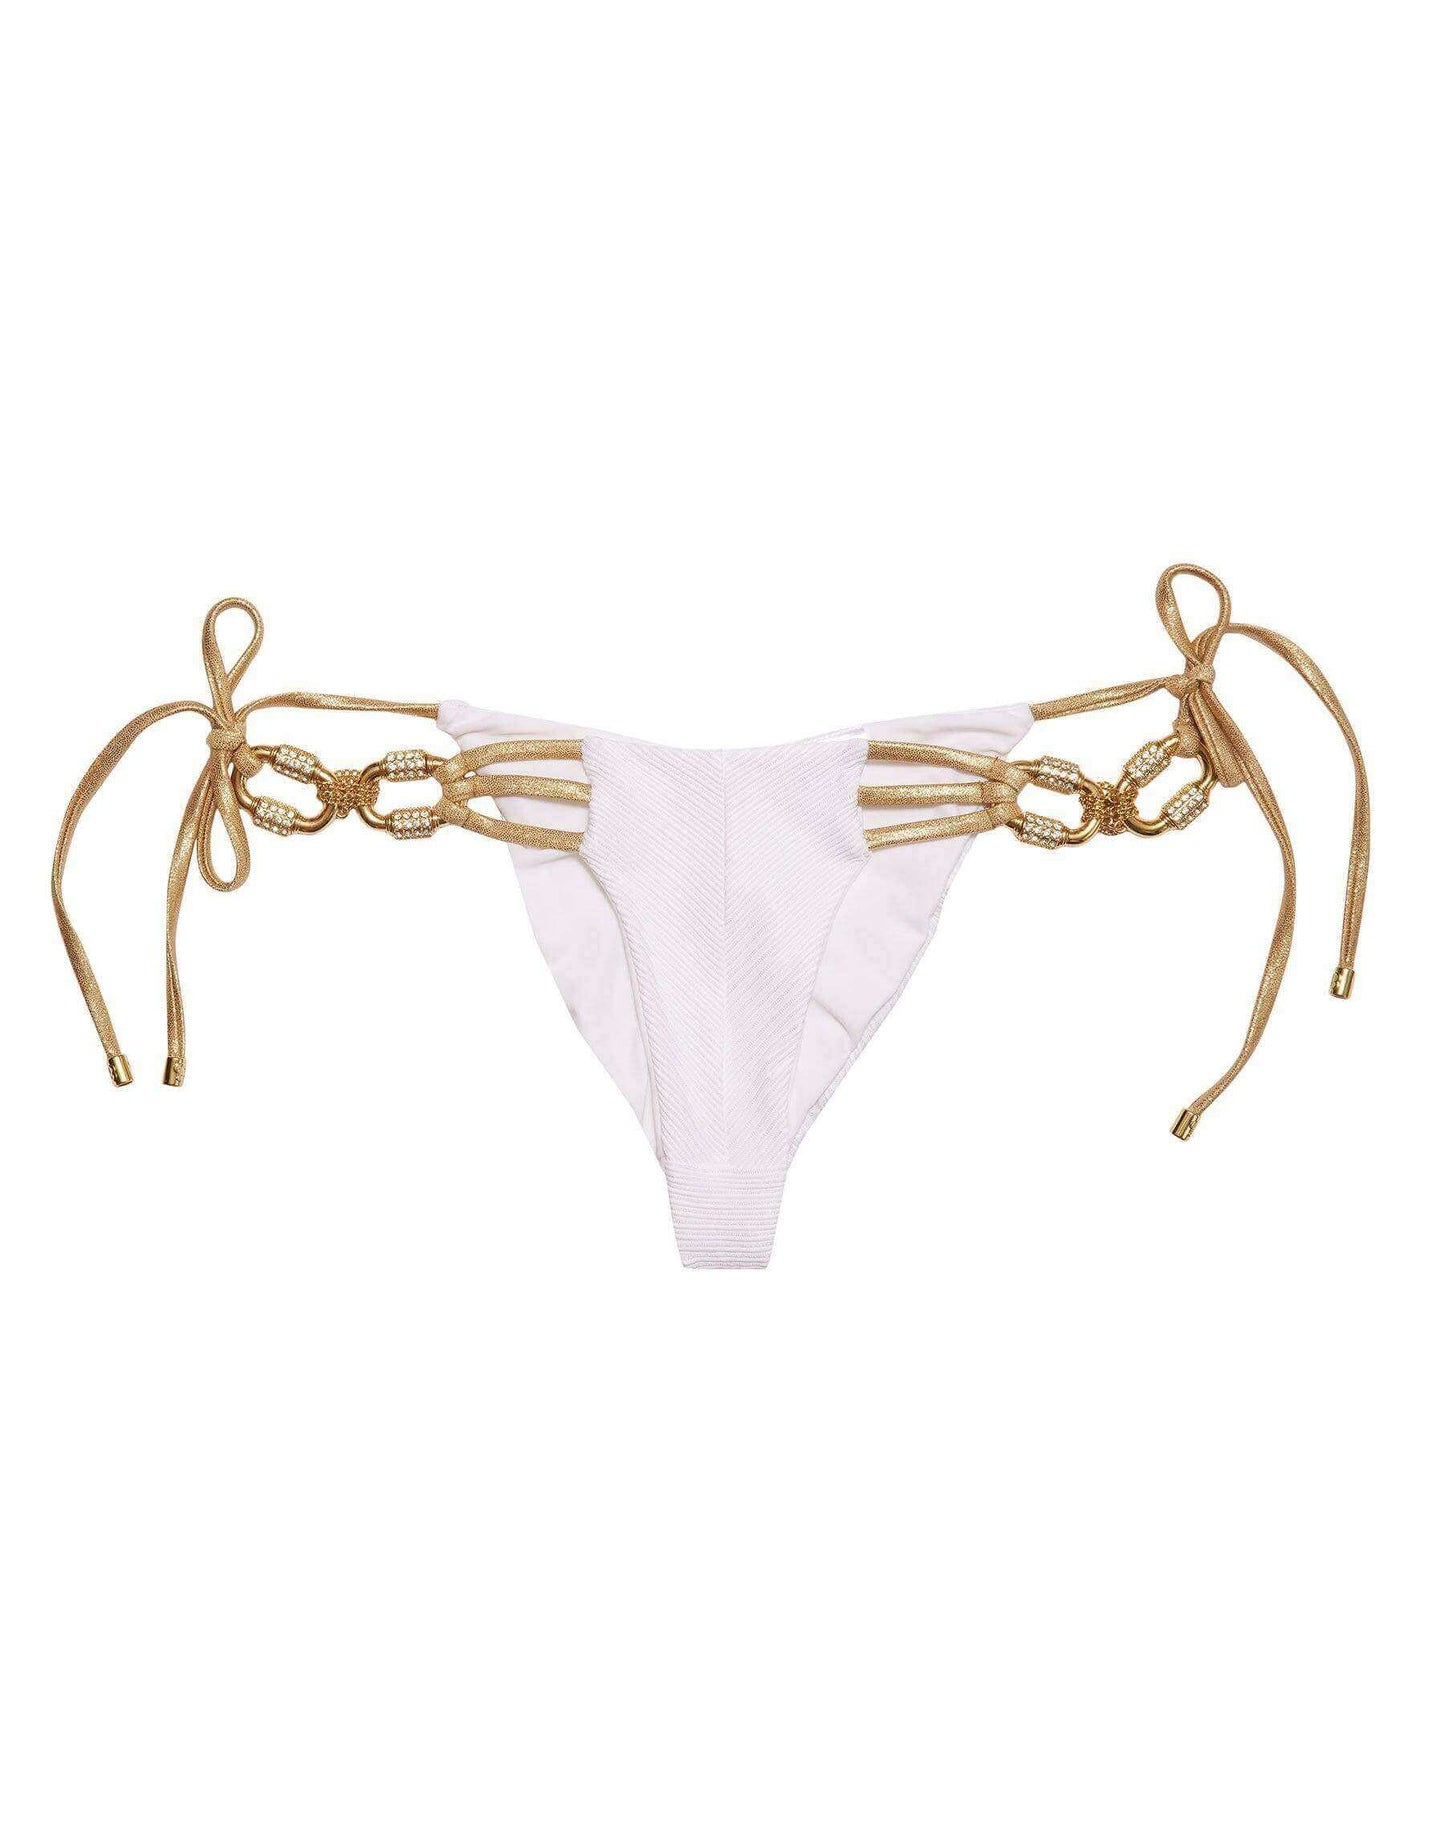 Beach Bunny Apparel & Accessories > Clothing > Swimwear Beach Bunny White Madagascar Glam Tie Side Bottom & Triangle Top Bikini Swimwear Set